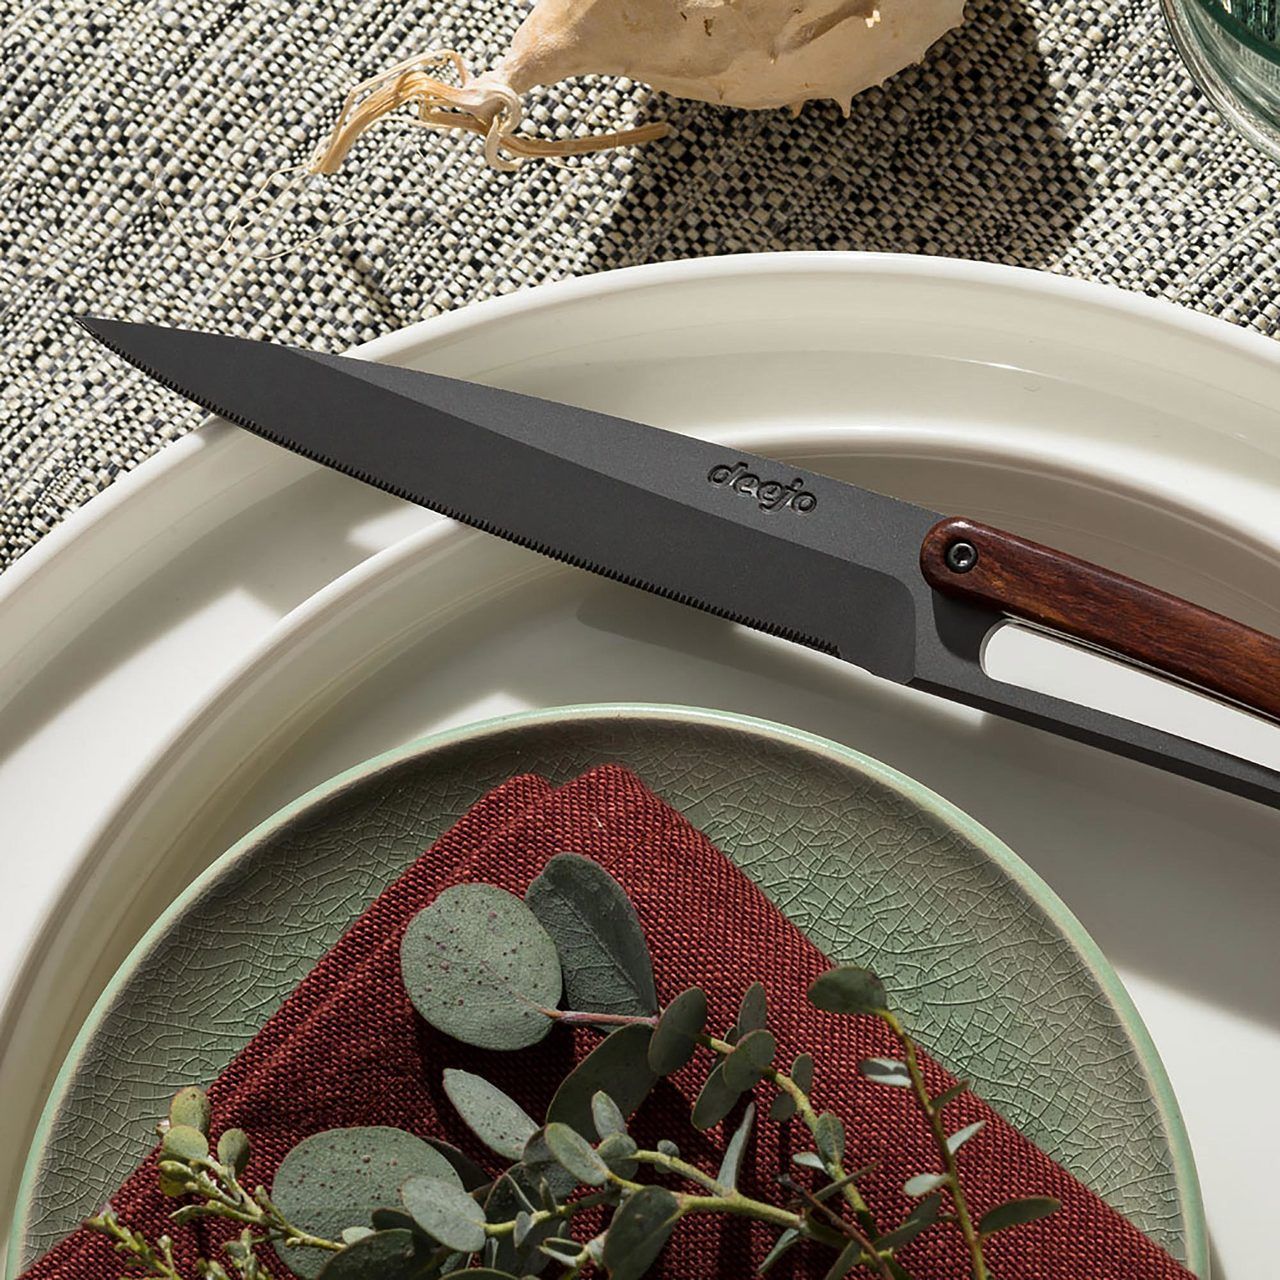 Steak Knife Set of 6, Serrated Steak Knife With Wooden Handle